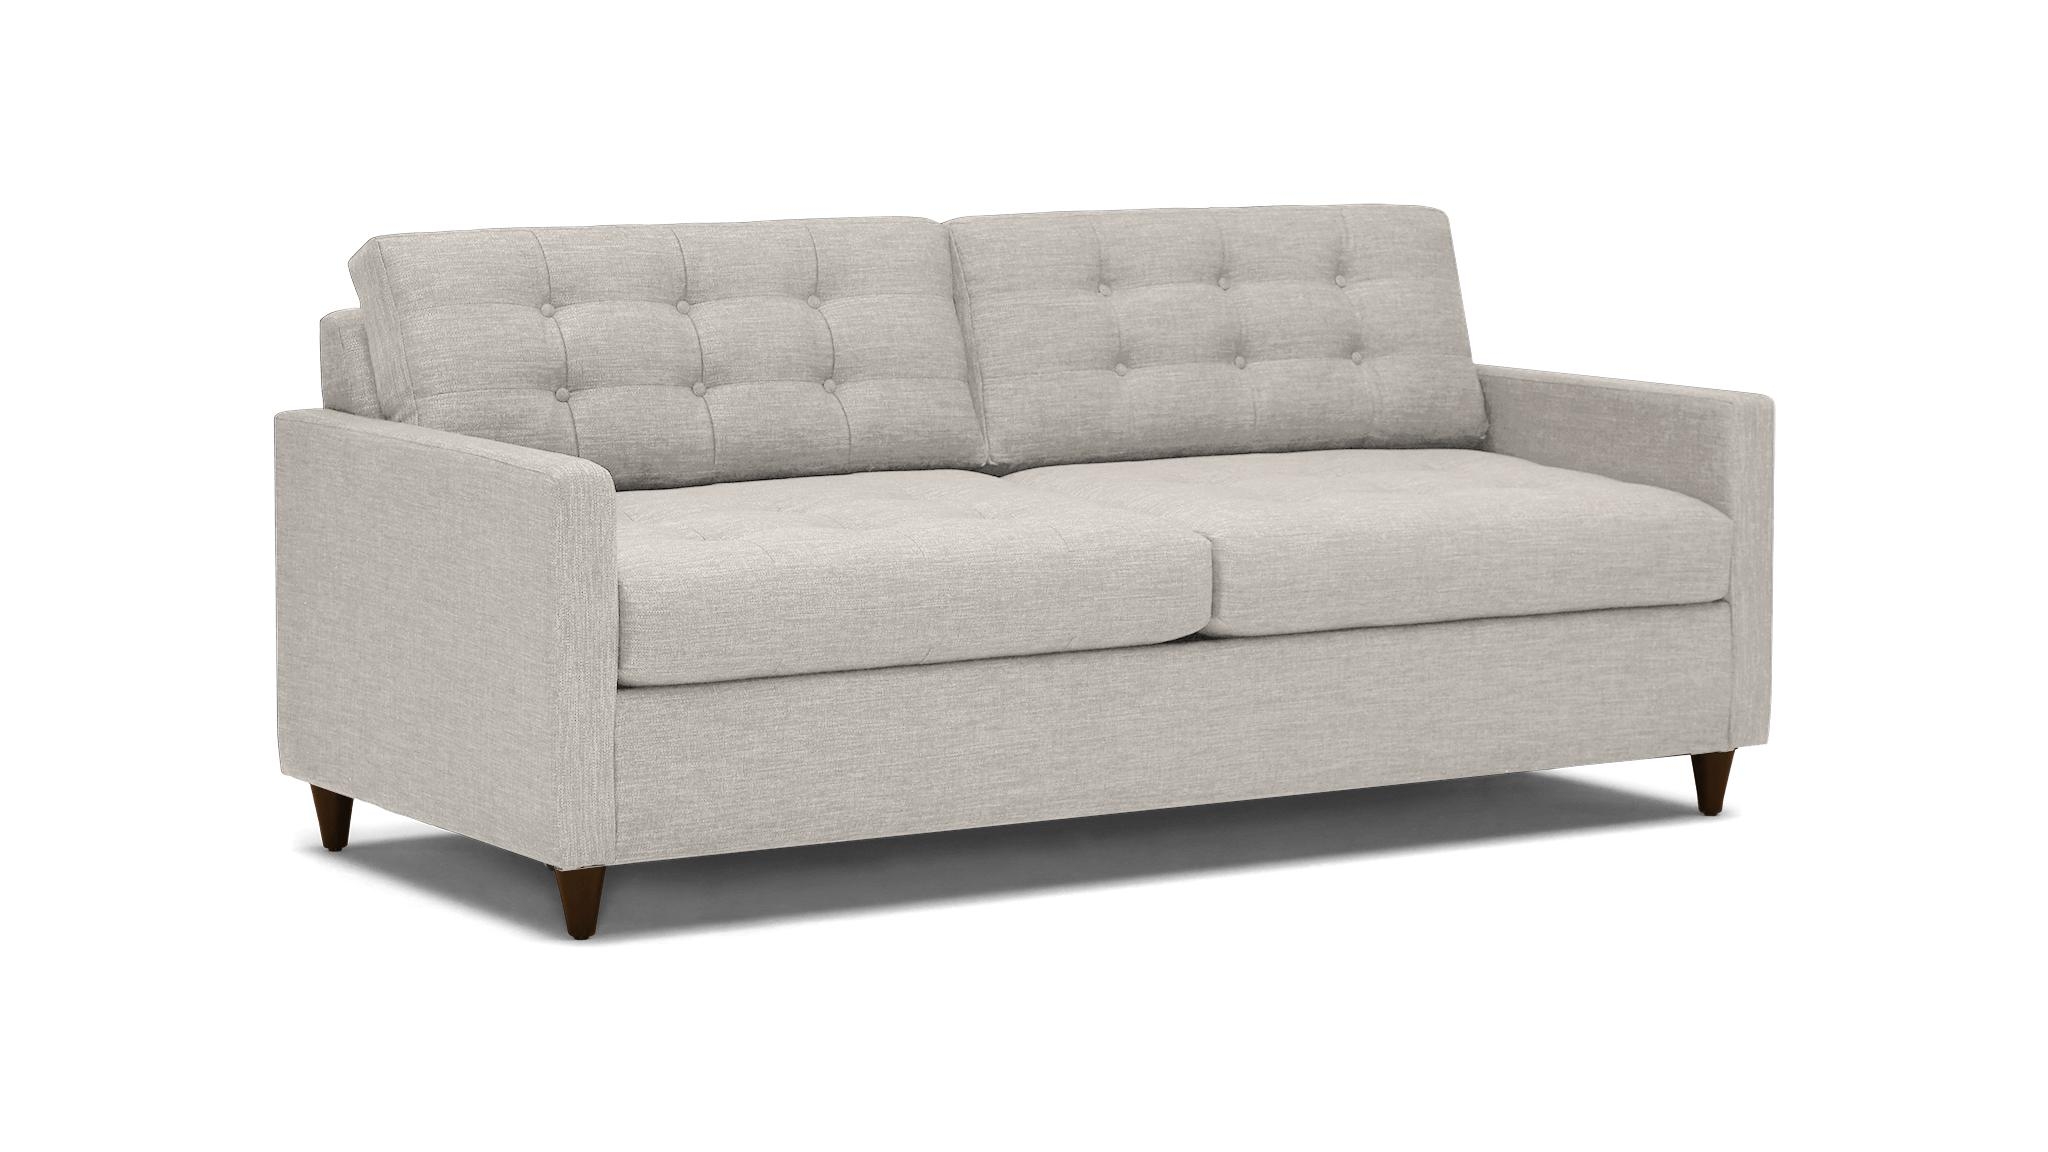 Beige/White Eliot Mid Century Modern Sleeper Sofa - Prime Stone - Mocha - Foam - Image 1